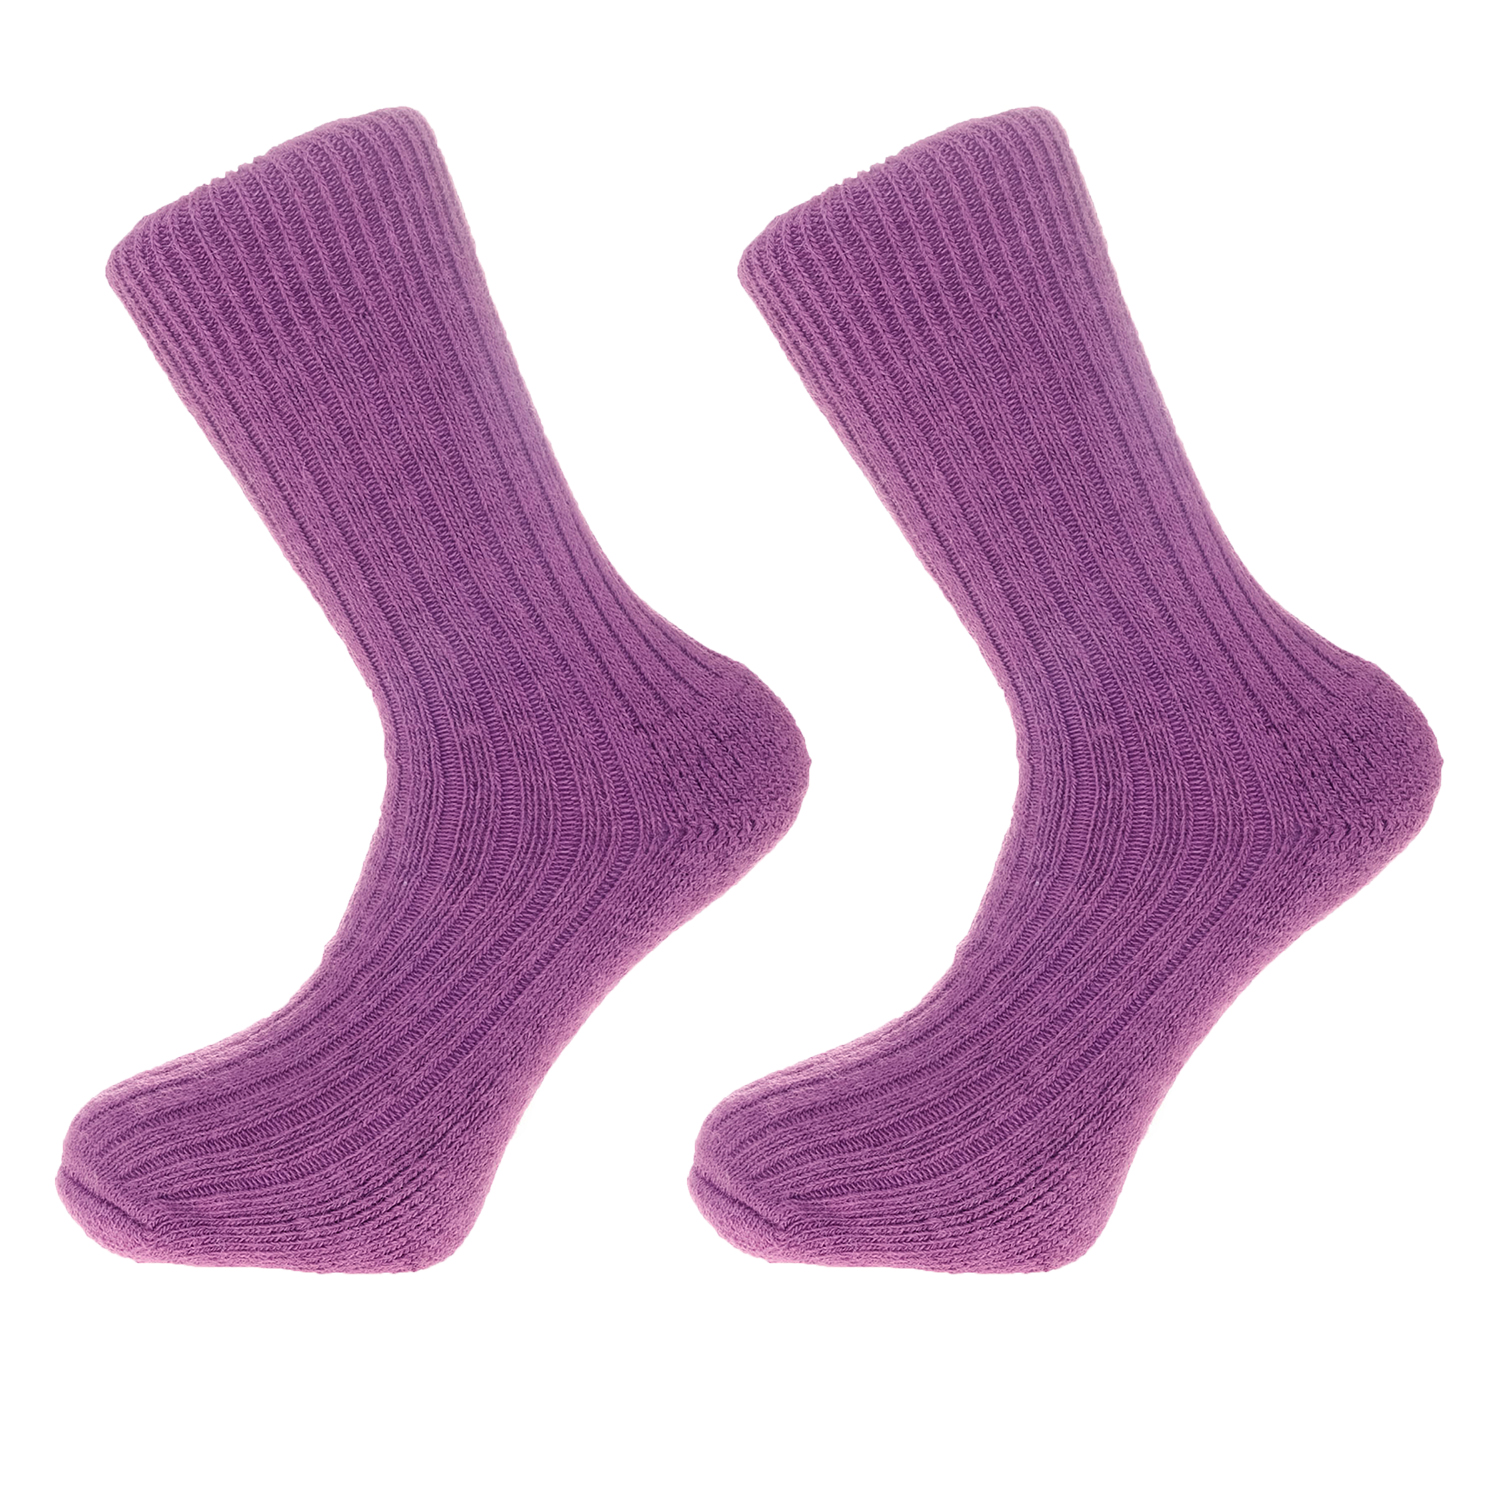 Alpaca walking socks, 75% Alpaca wool. Thick socks with a cushioned ...